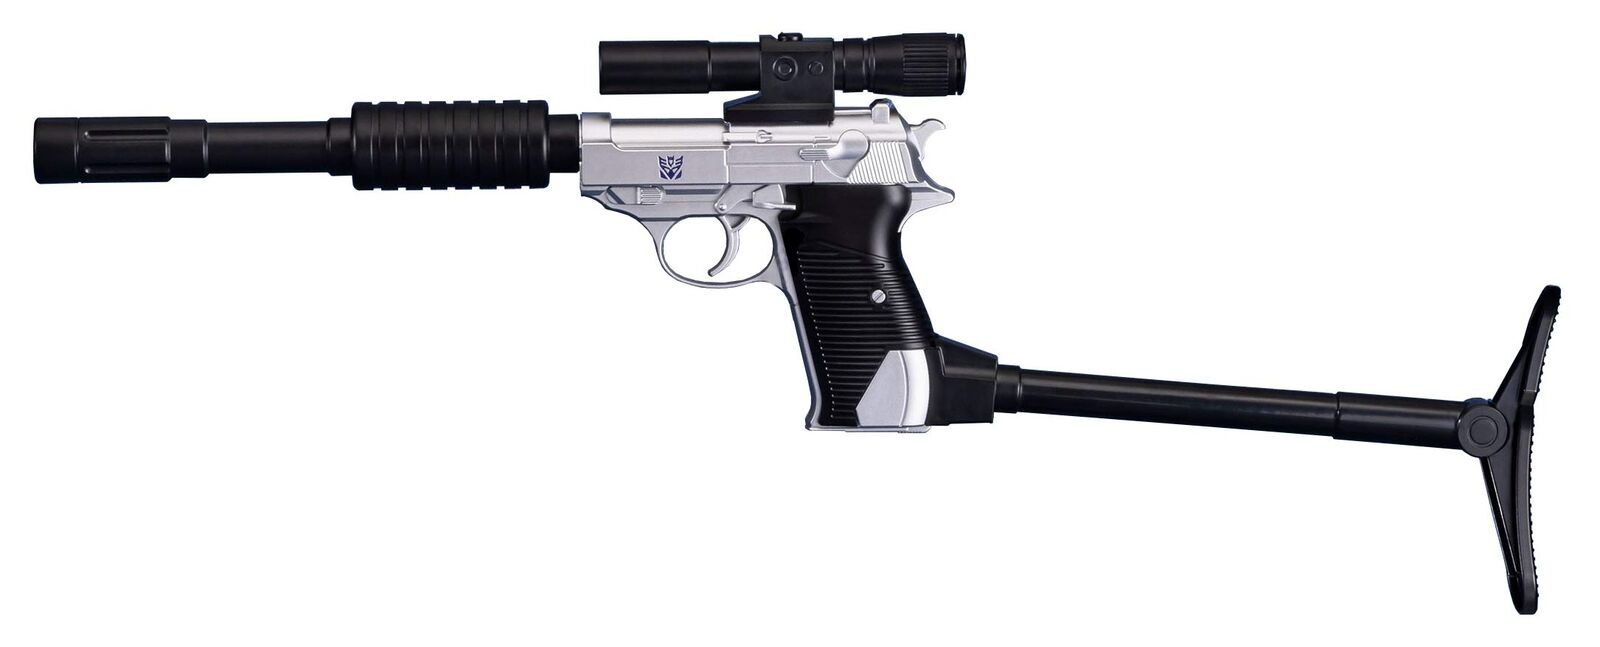 DAIKI Water Gun TRANSFORMERS MEGATRON GUN MODE 222mm WATER GUN  New